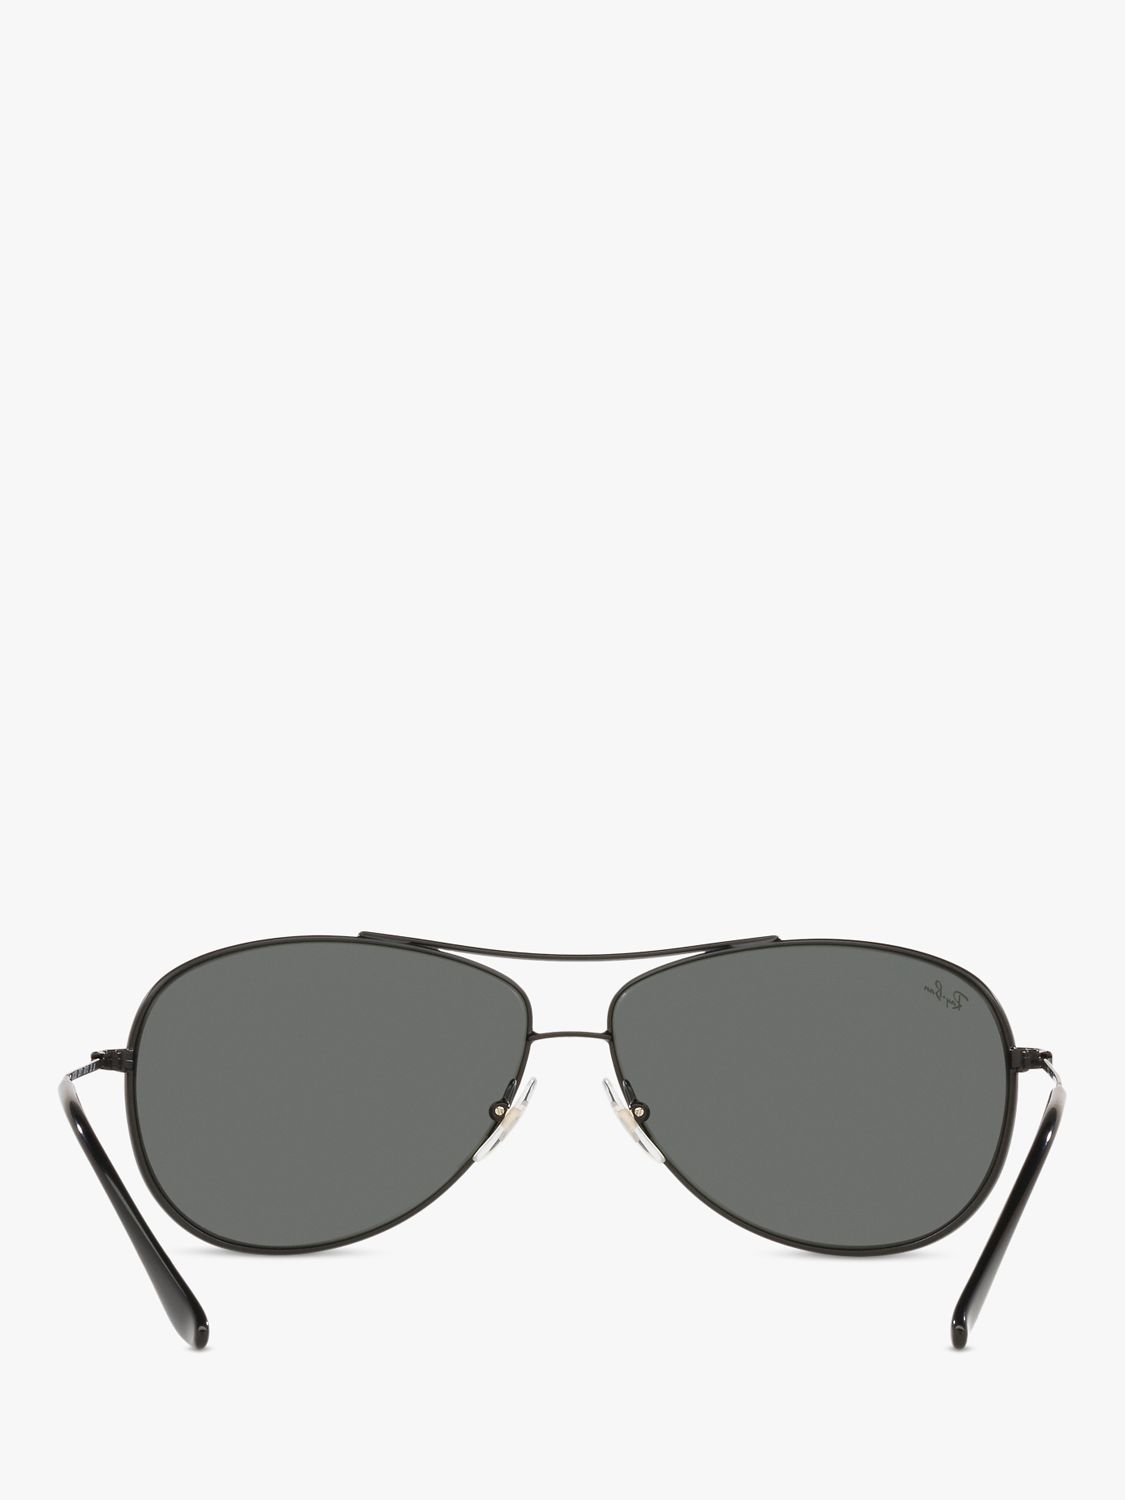 Ray-Ban RB3293 Men's Aviator Sunglasses, Black/Green